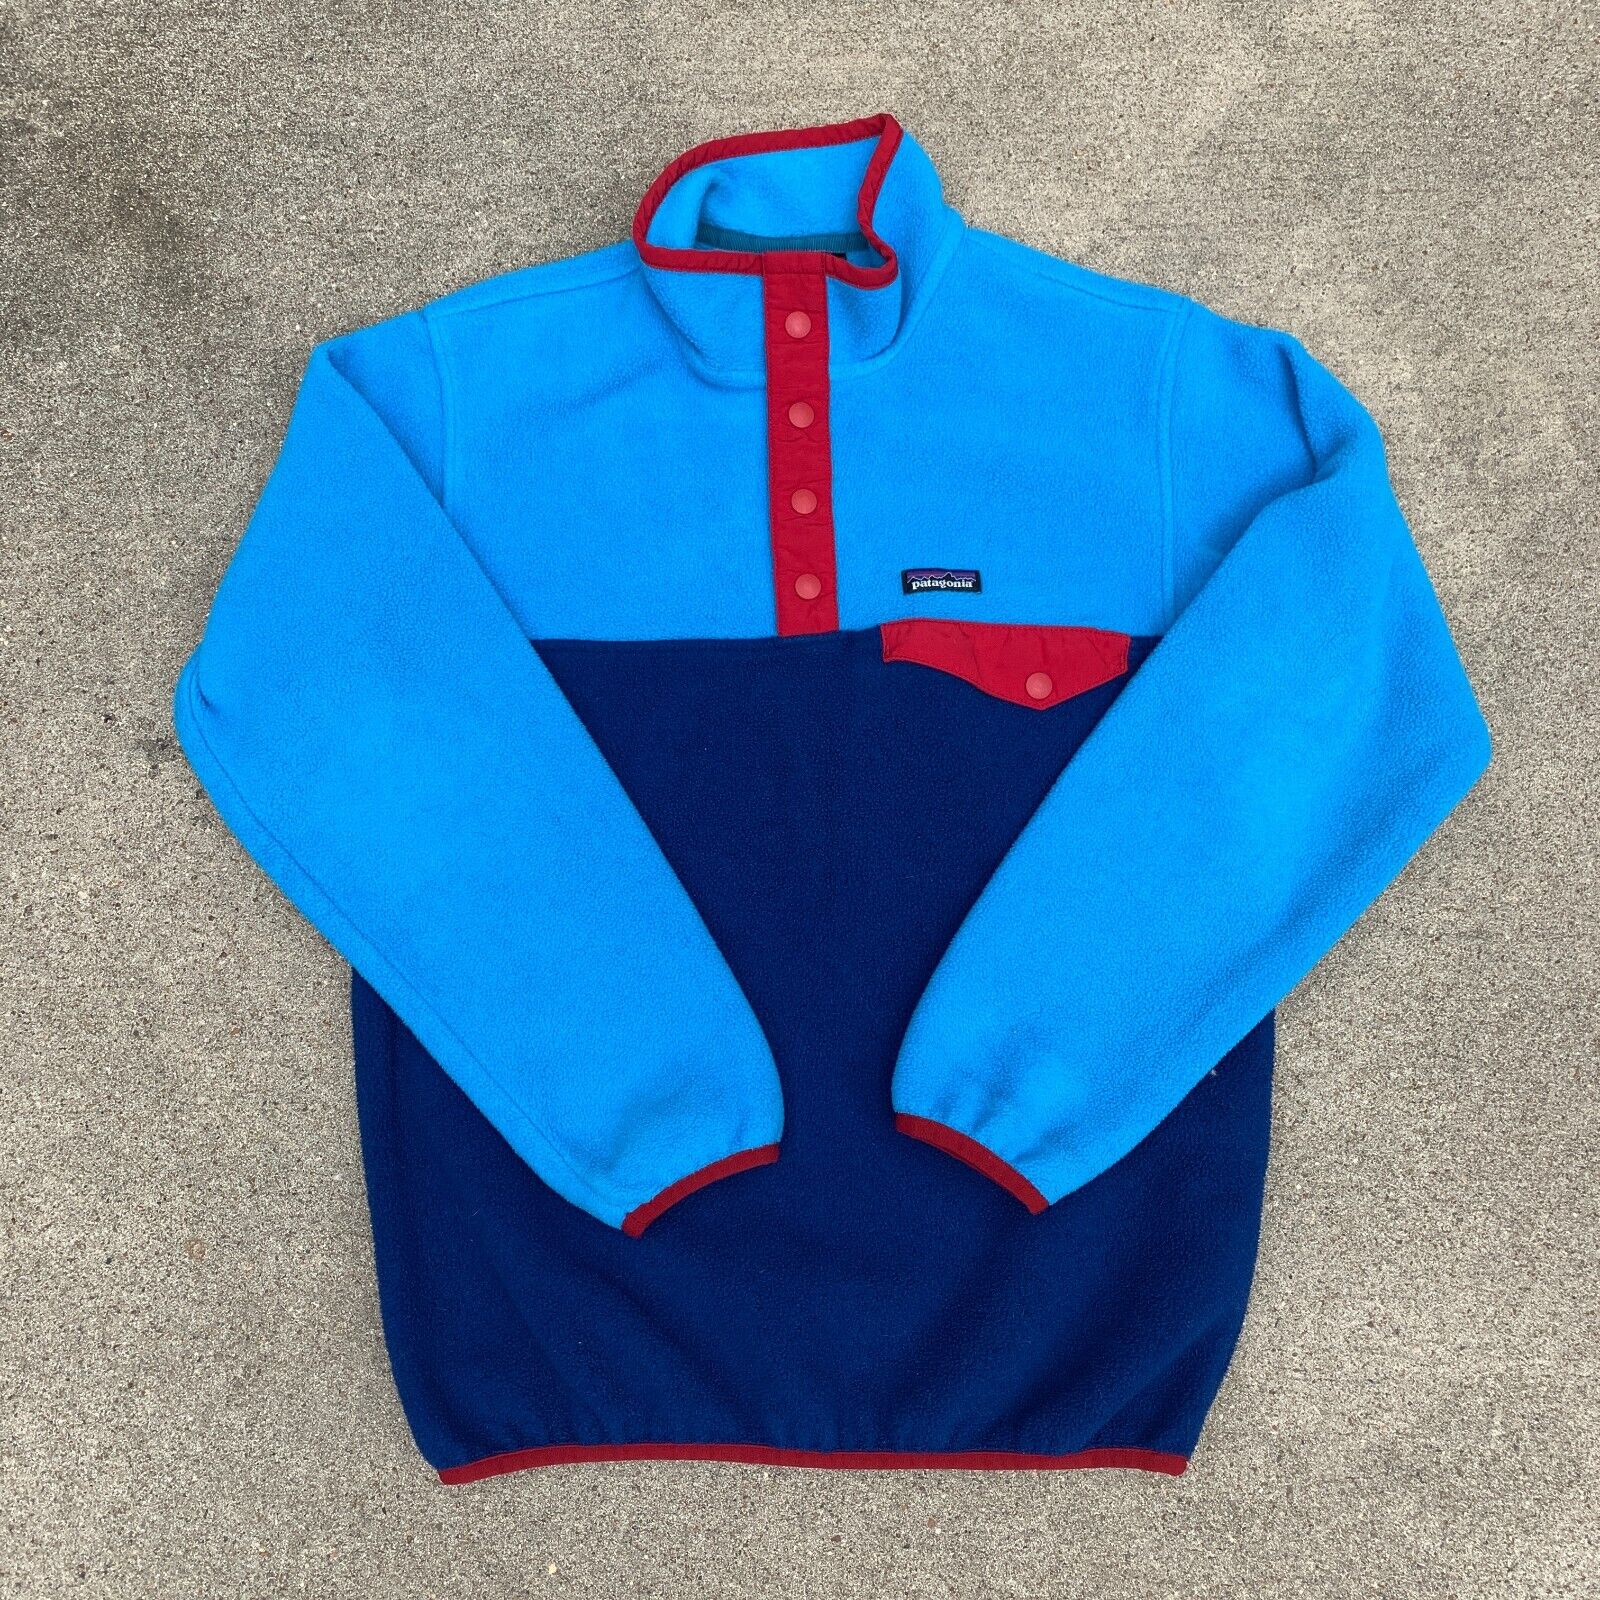 Patagonia Sweater Youth Large Blue Synchilla Snap-T Fleece Jacket Kids Boys